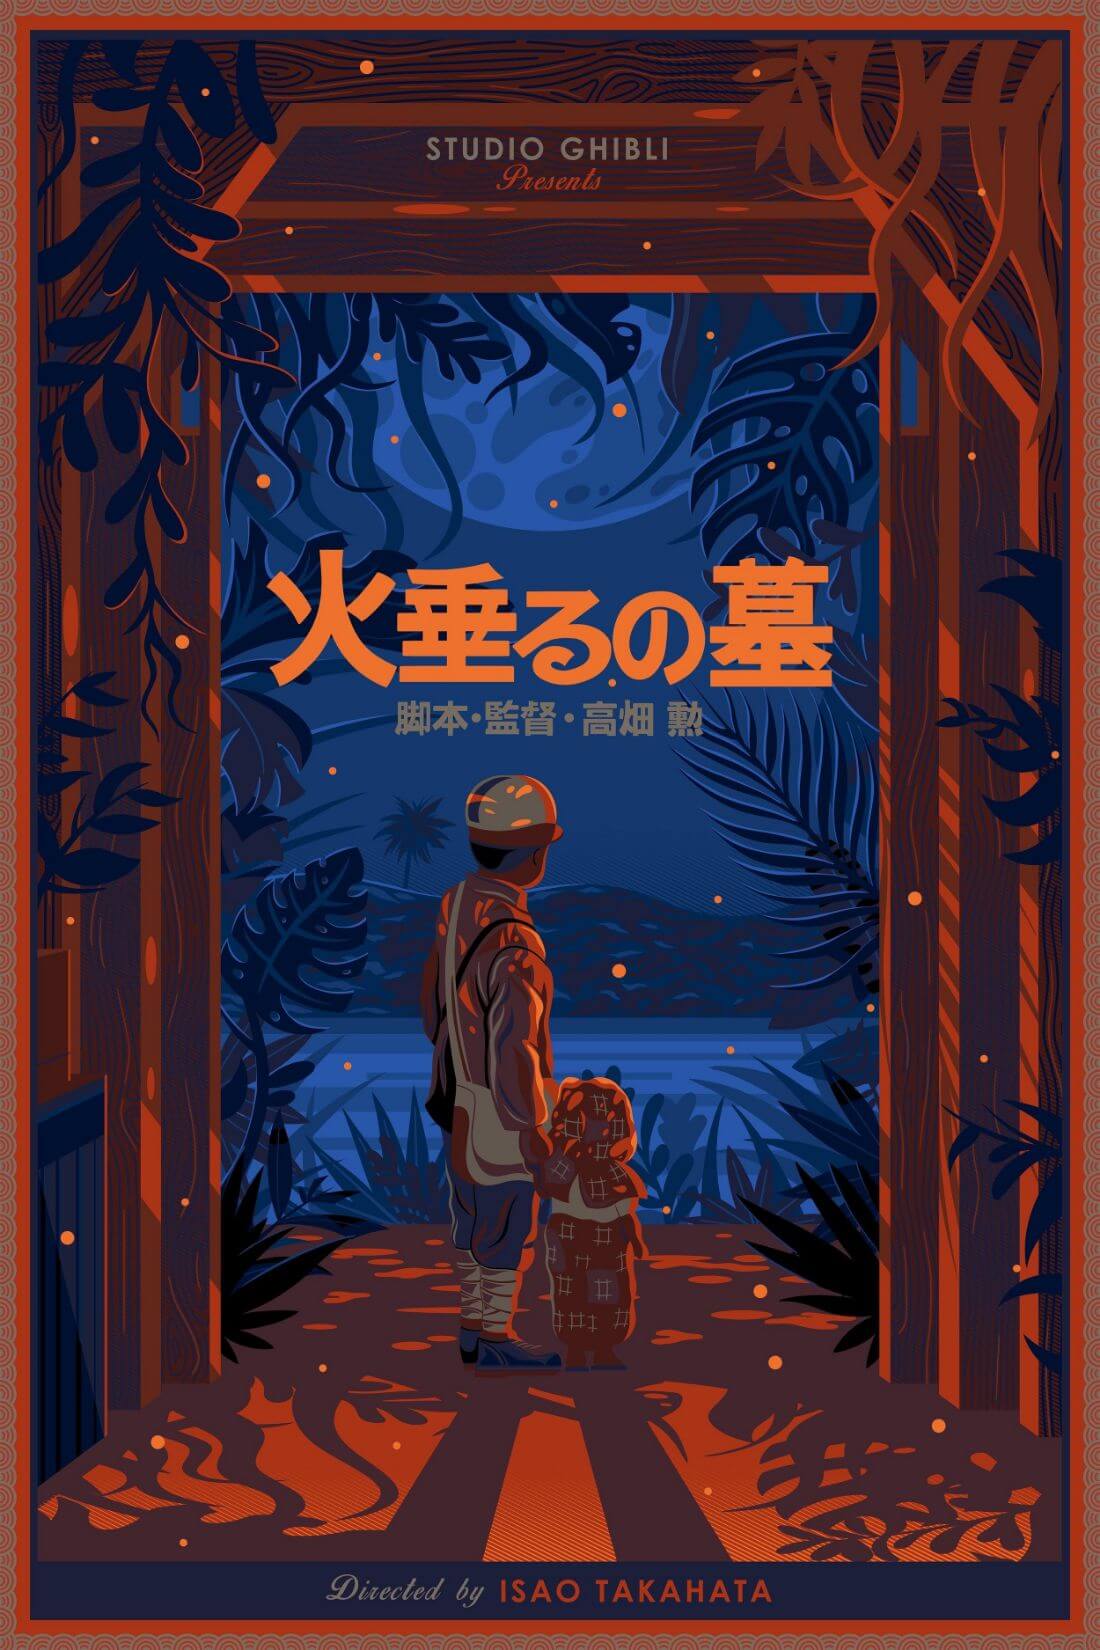 Ghibli Grave of the Fireflies original movie POSTER JAPAN B2 Isao Takahata  F/S